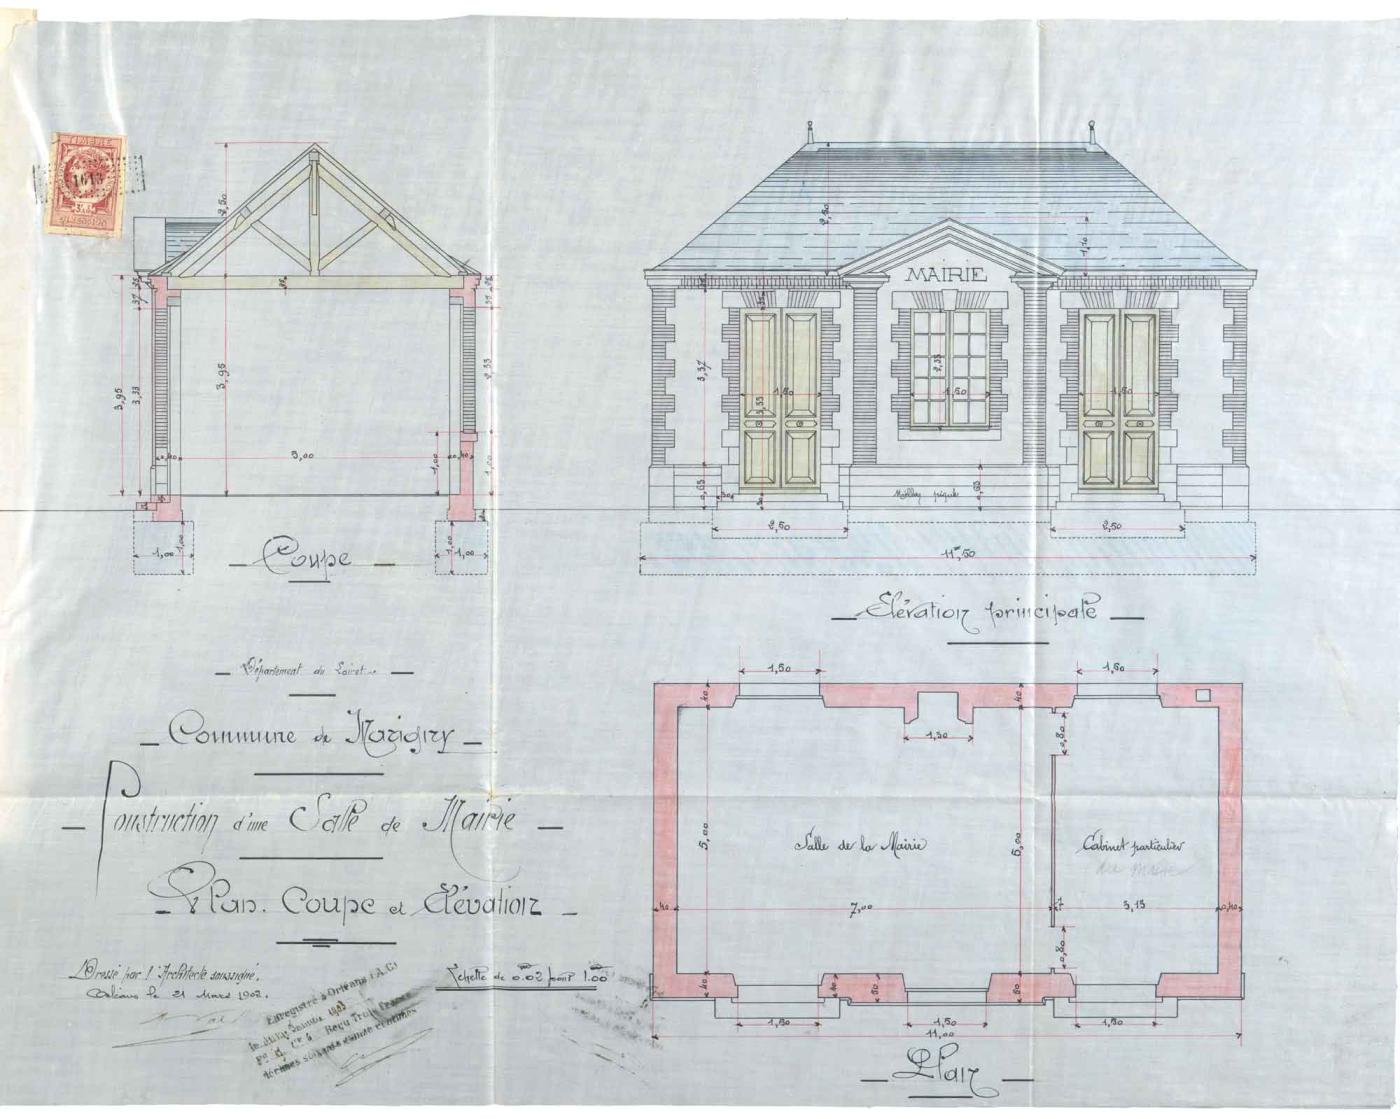 Plan de la mairie de Marigny-les-Usages en 1902